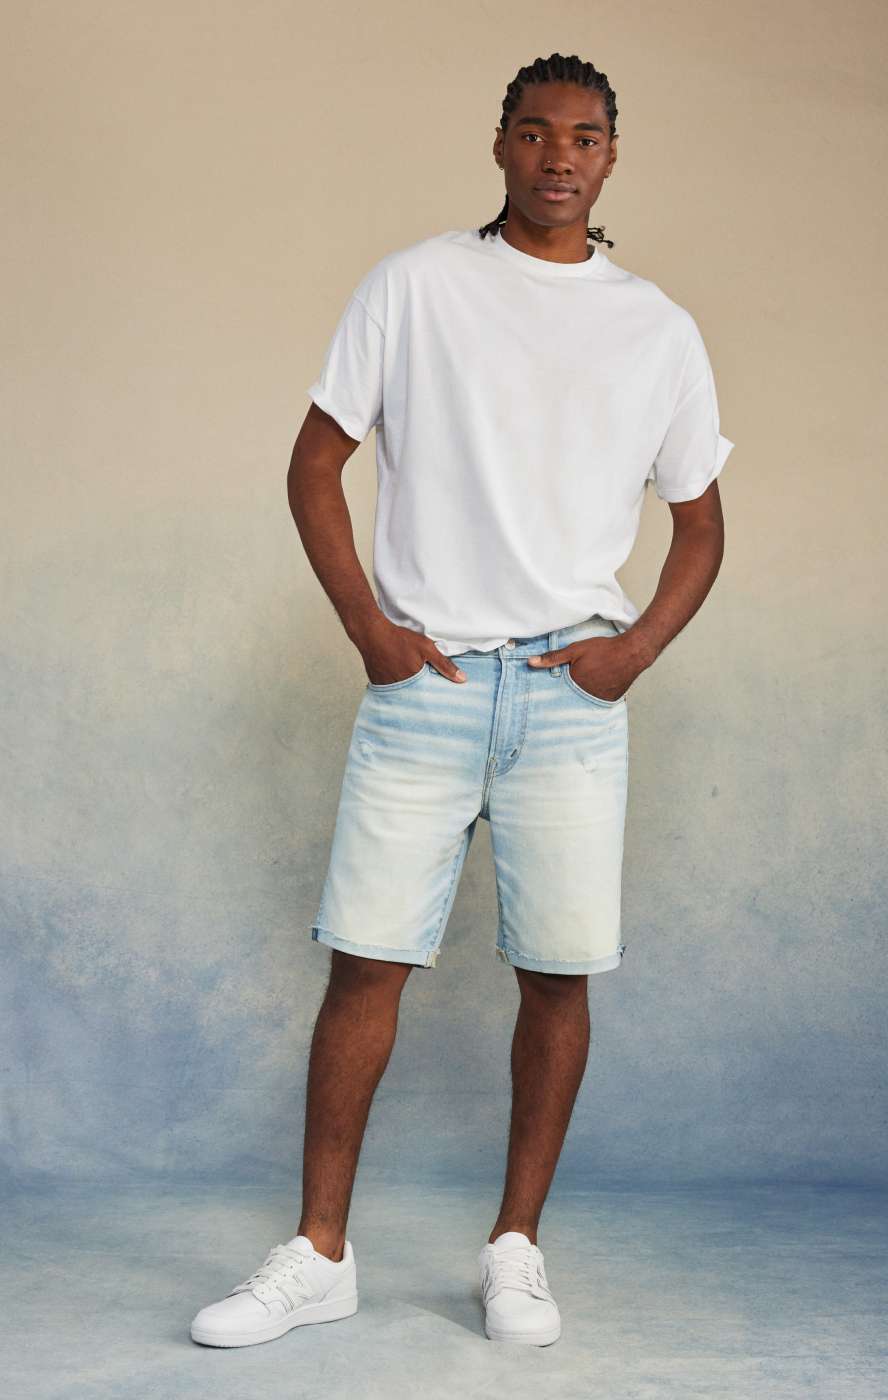 Model in light wash denim shorts and white tee shirt